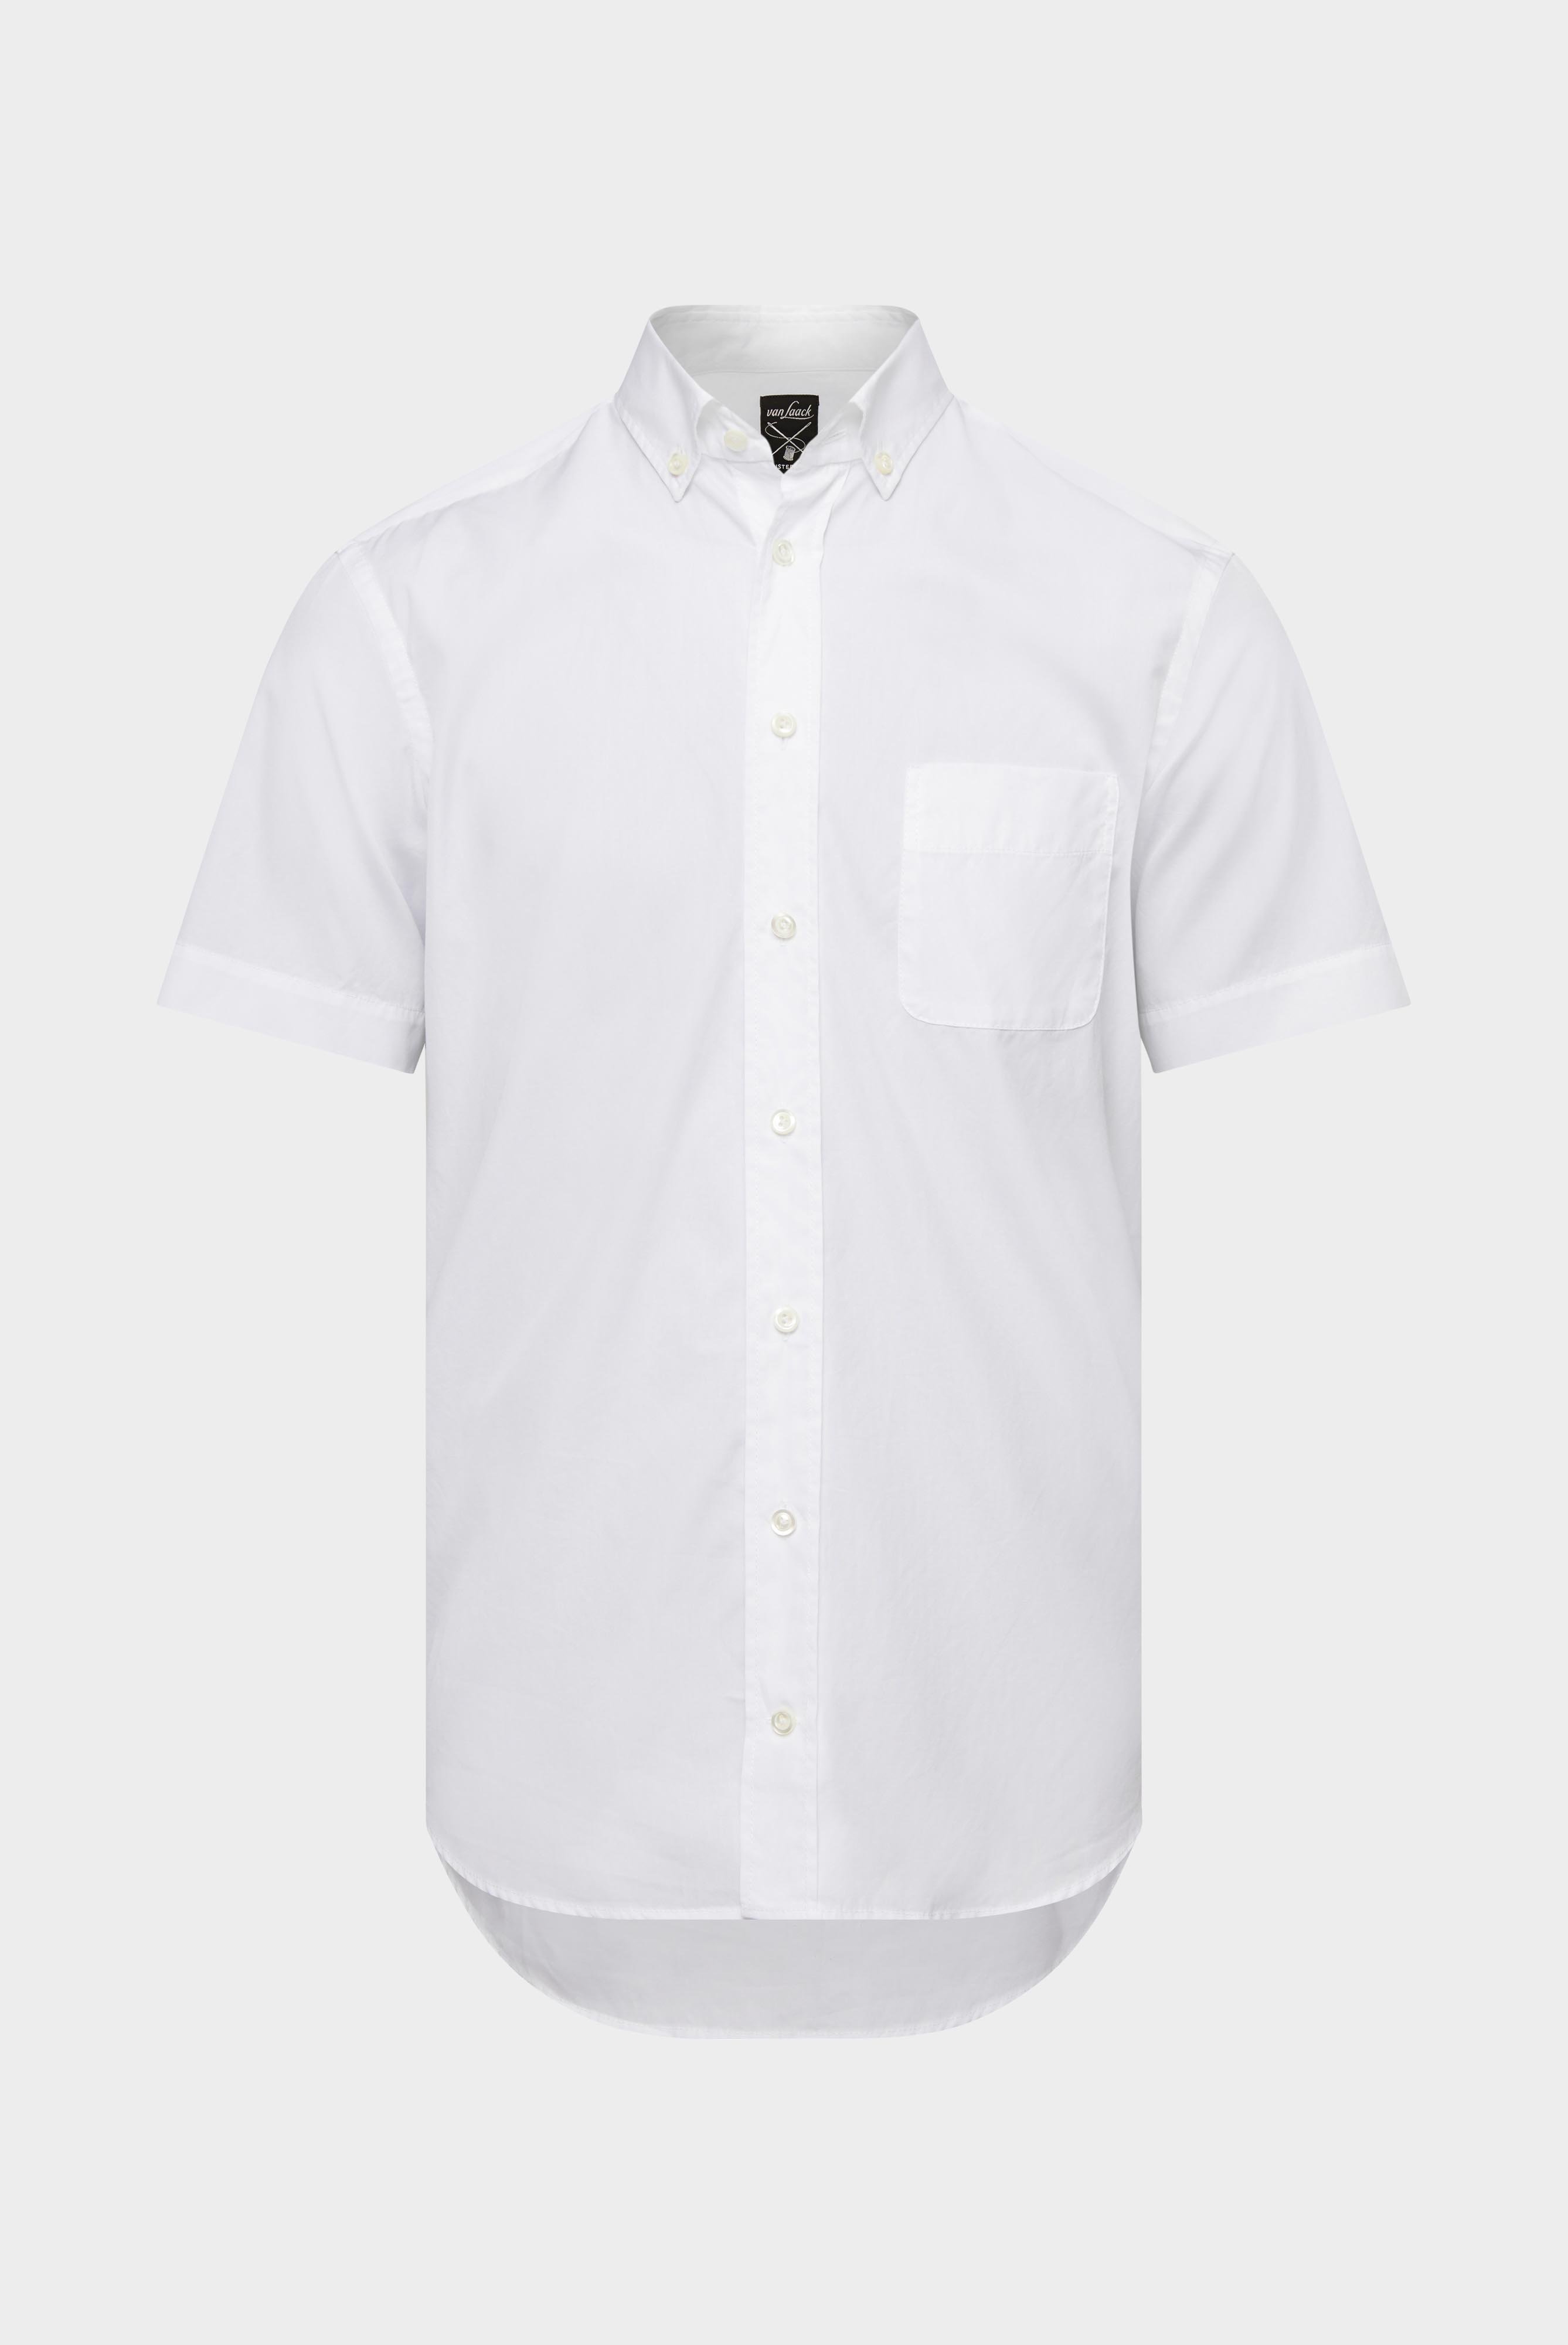 Kurzarm Hemden+Kurzärmliges Hemd aus Baumwollpopeline+20.2053.Q2.130648.000.41